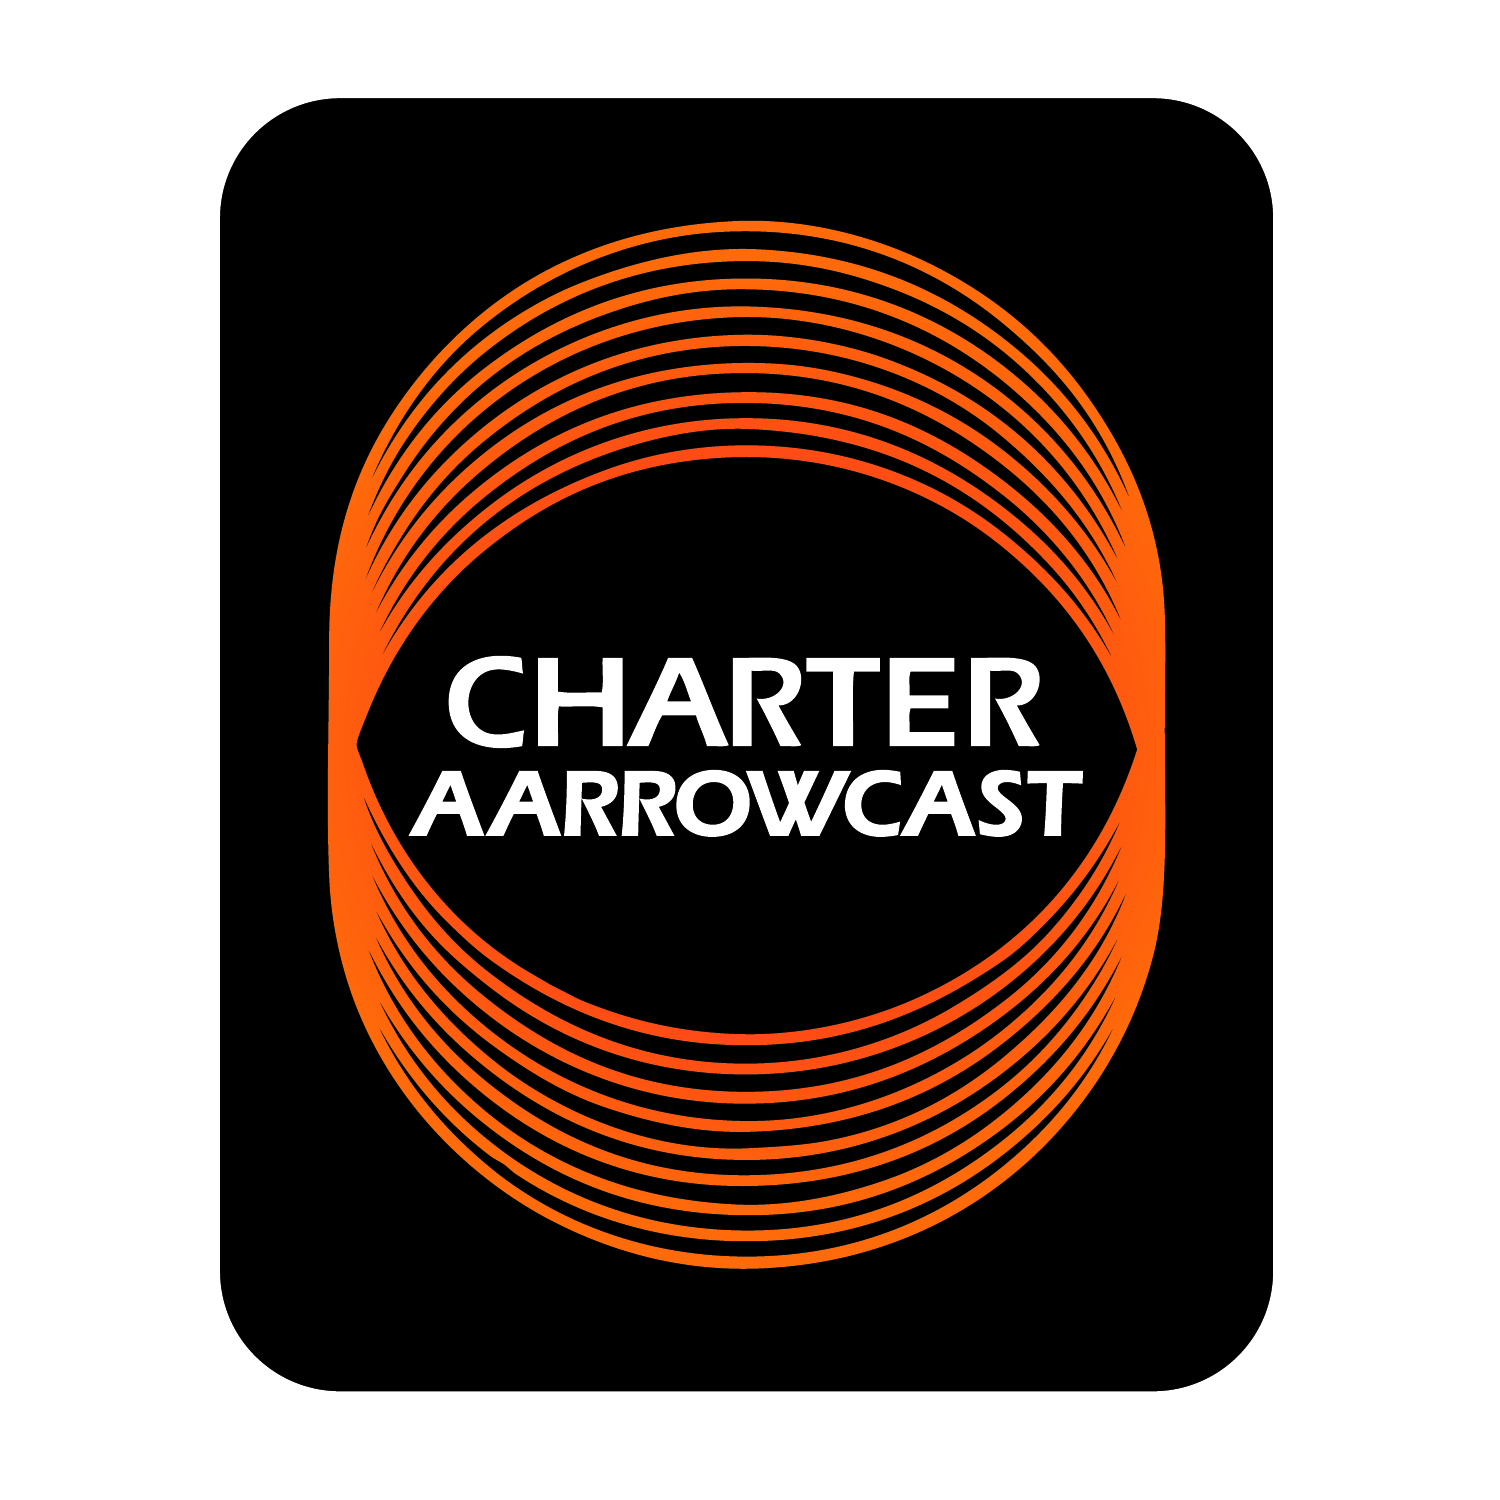 Charter Aarrowcast